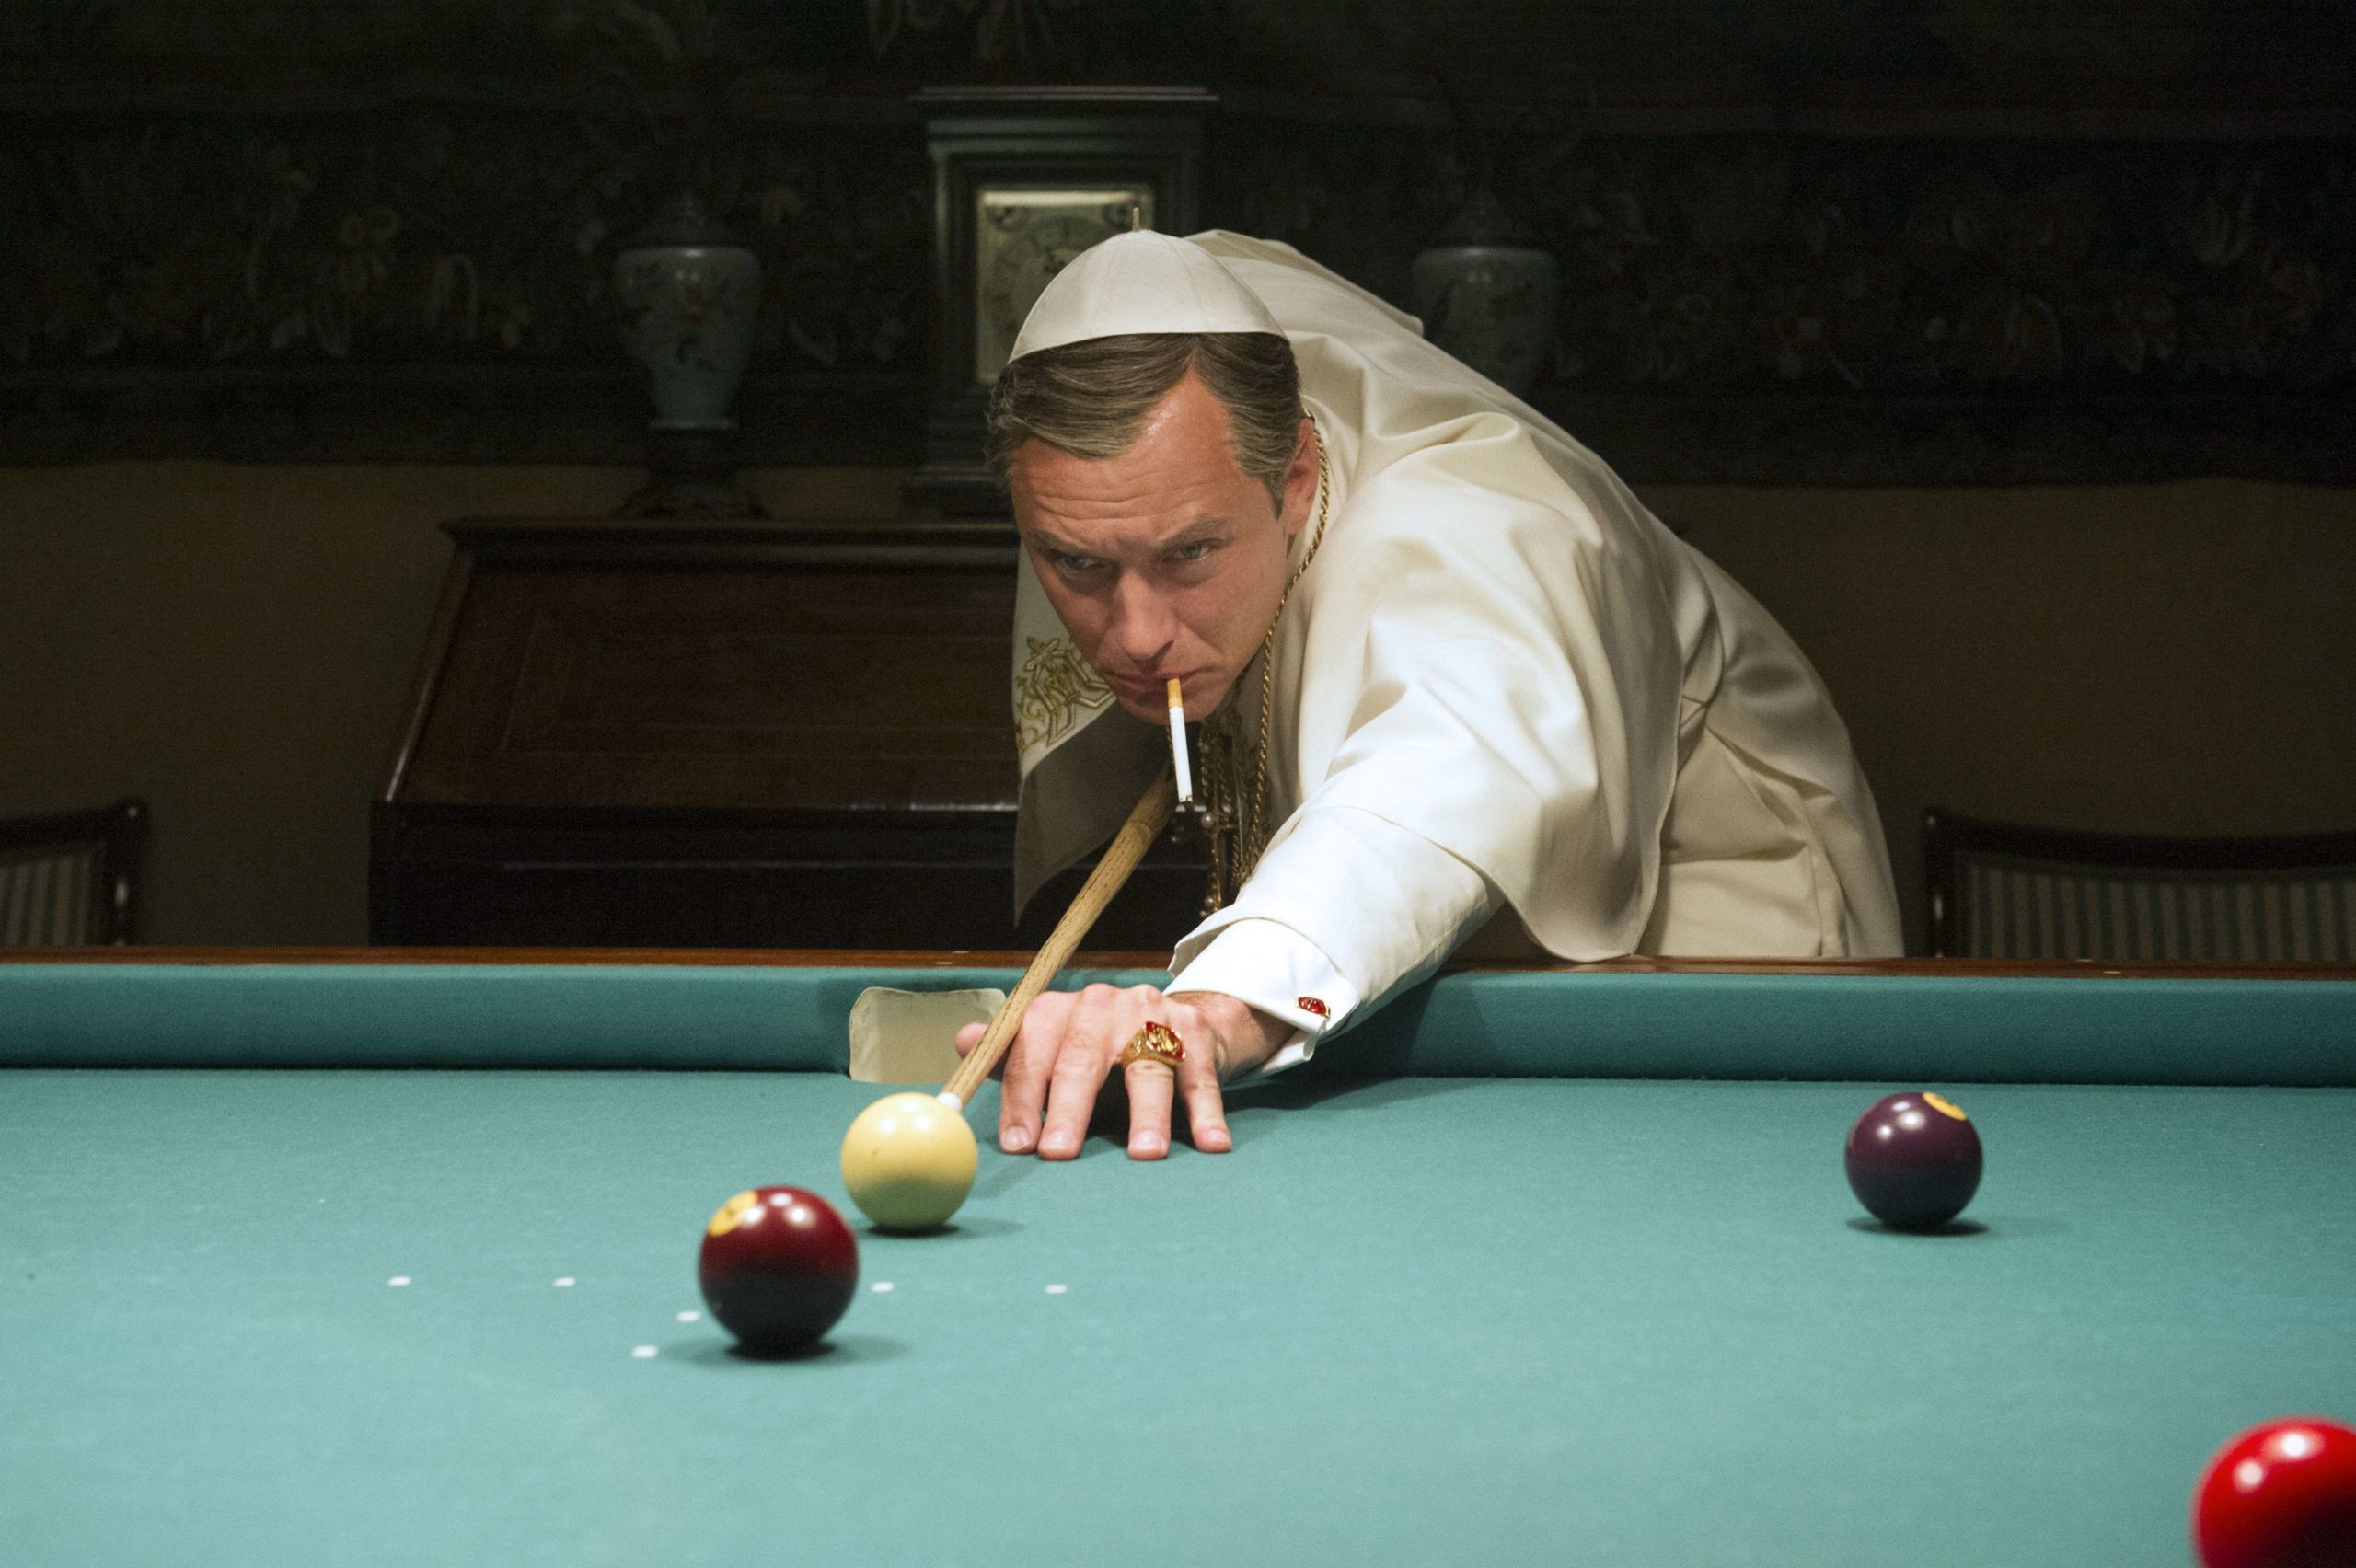 Lenny Belardo dit Pie XIII (Jude Law) dans la Série The Young Pope